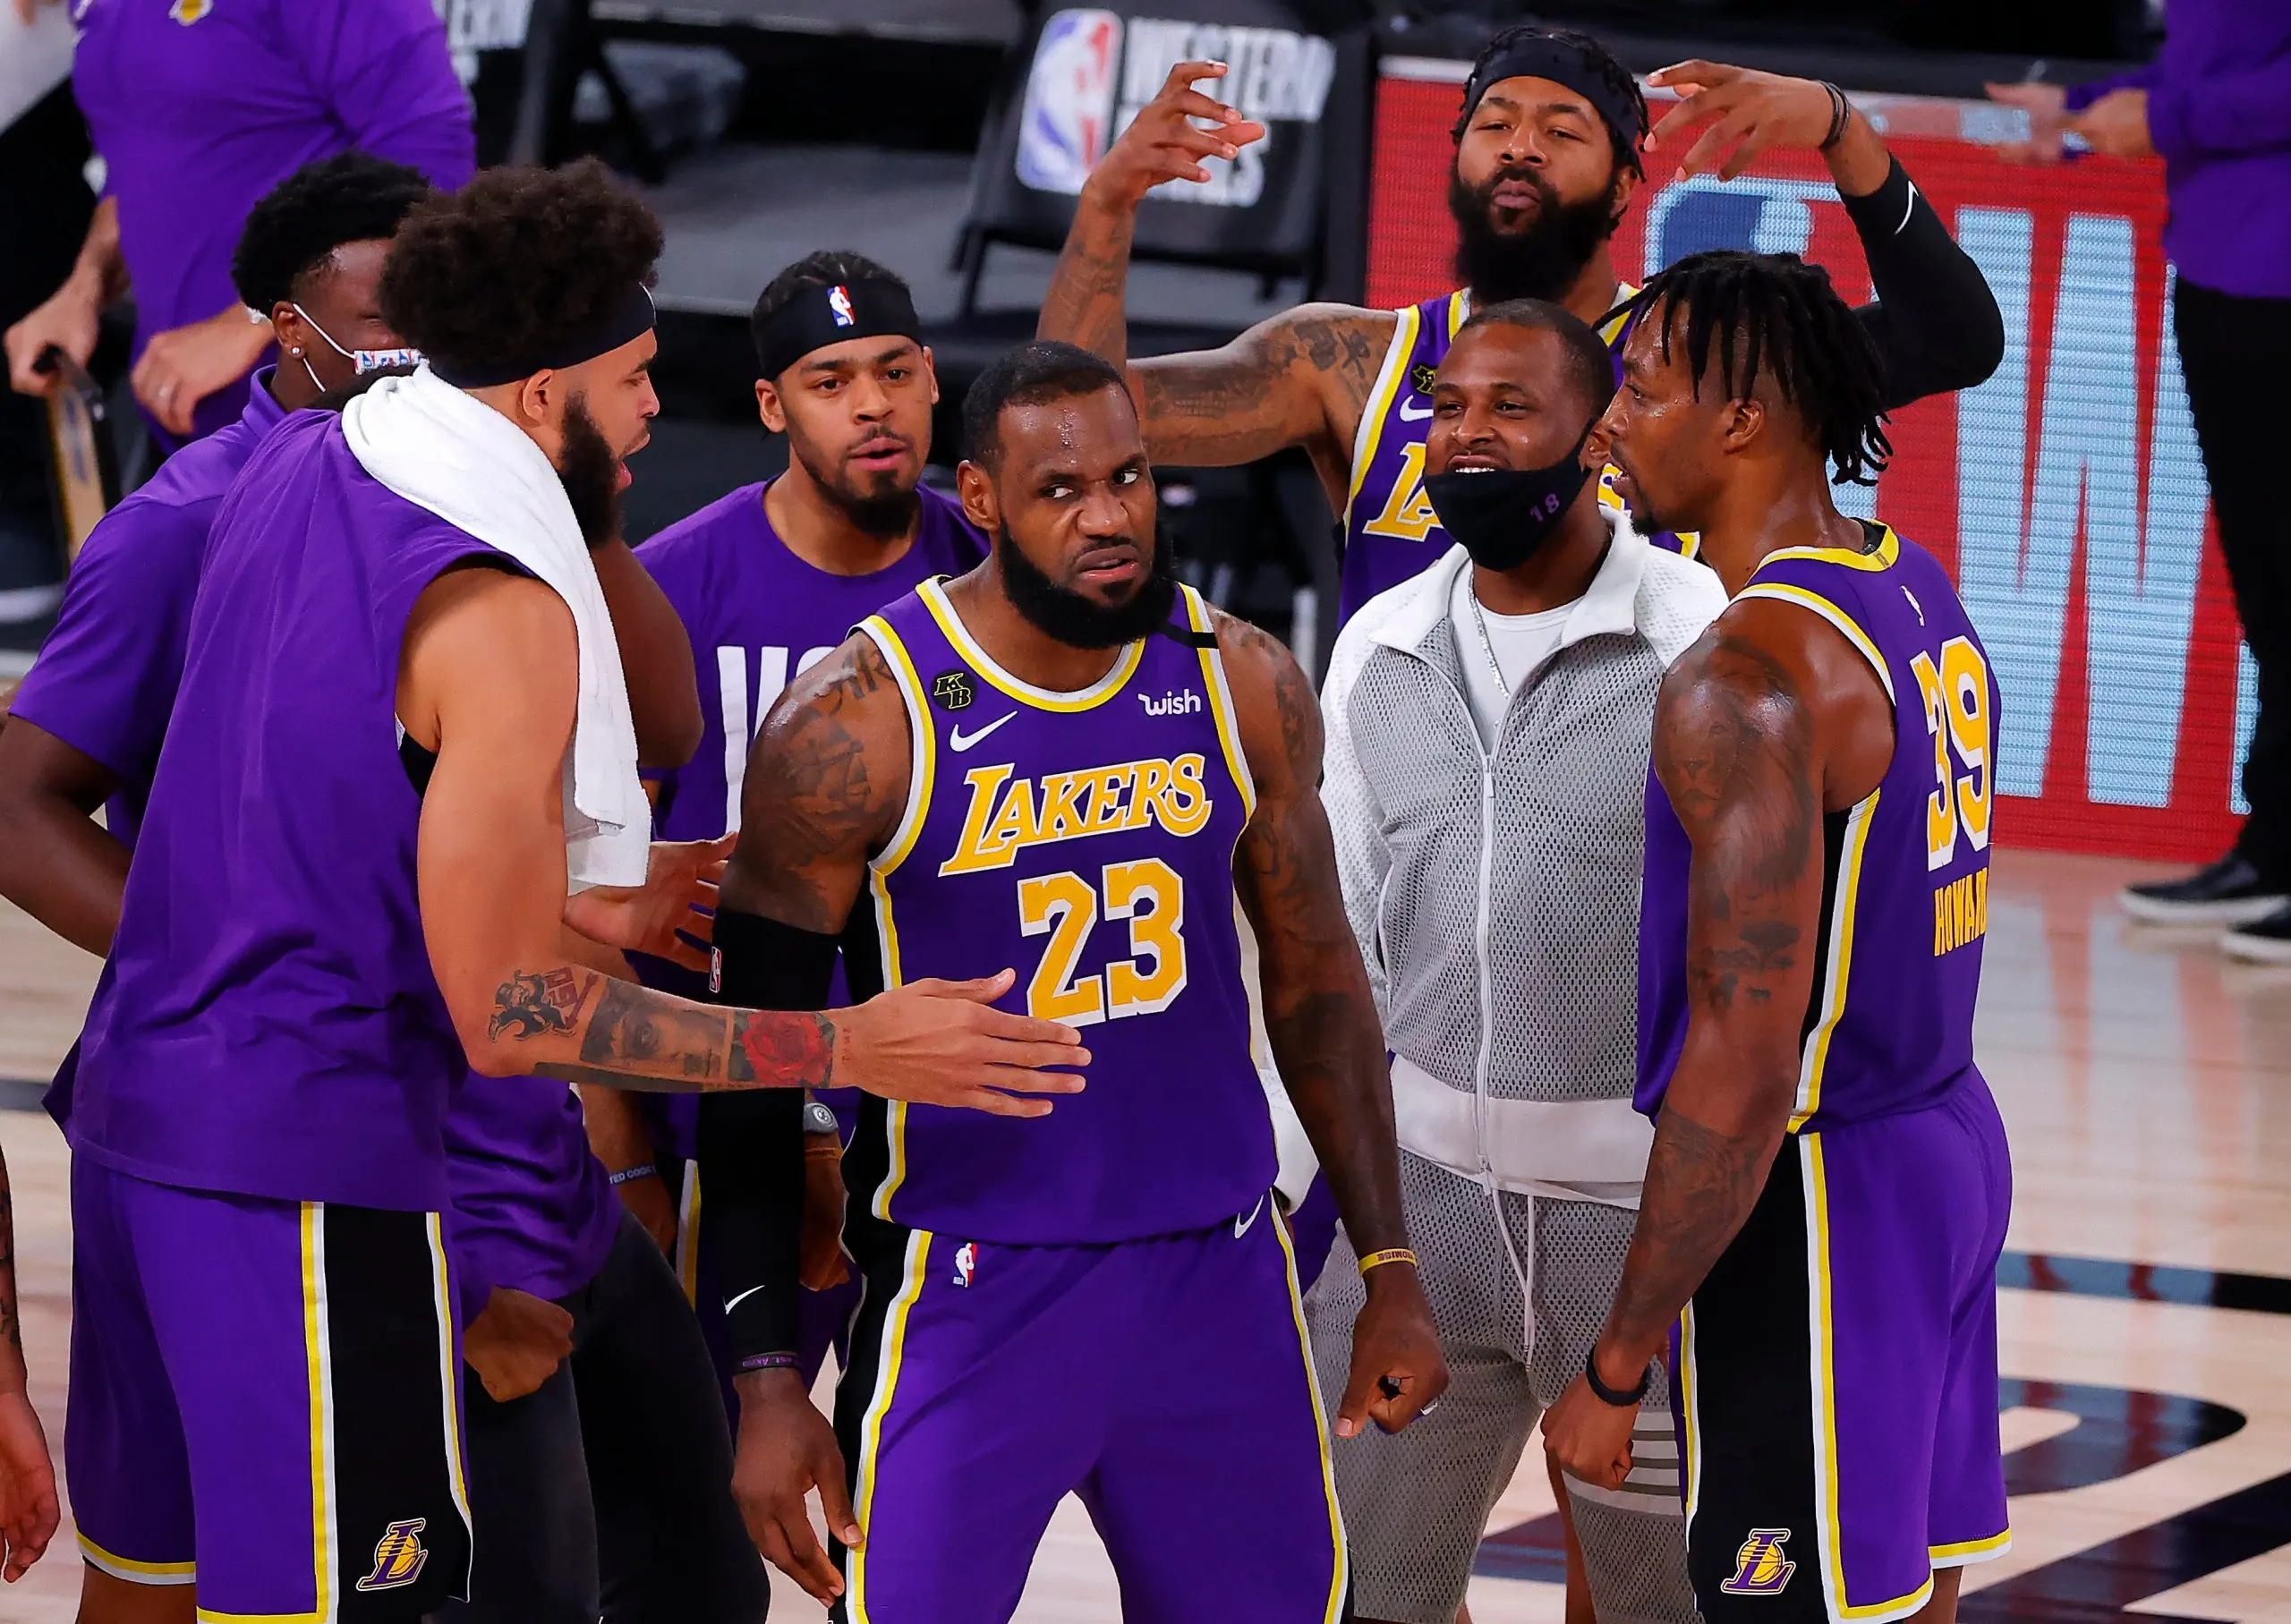 Trap na cena - Hoje tem o jogo 2 da final da NBA, Lakers X Miami